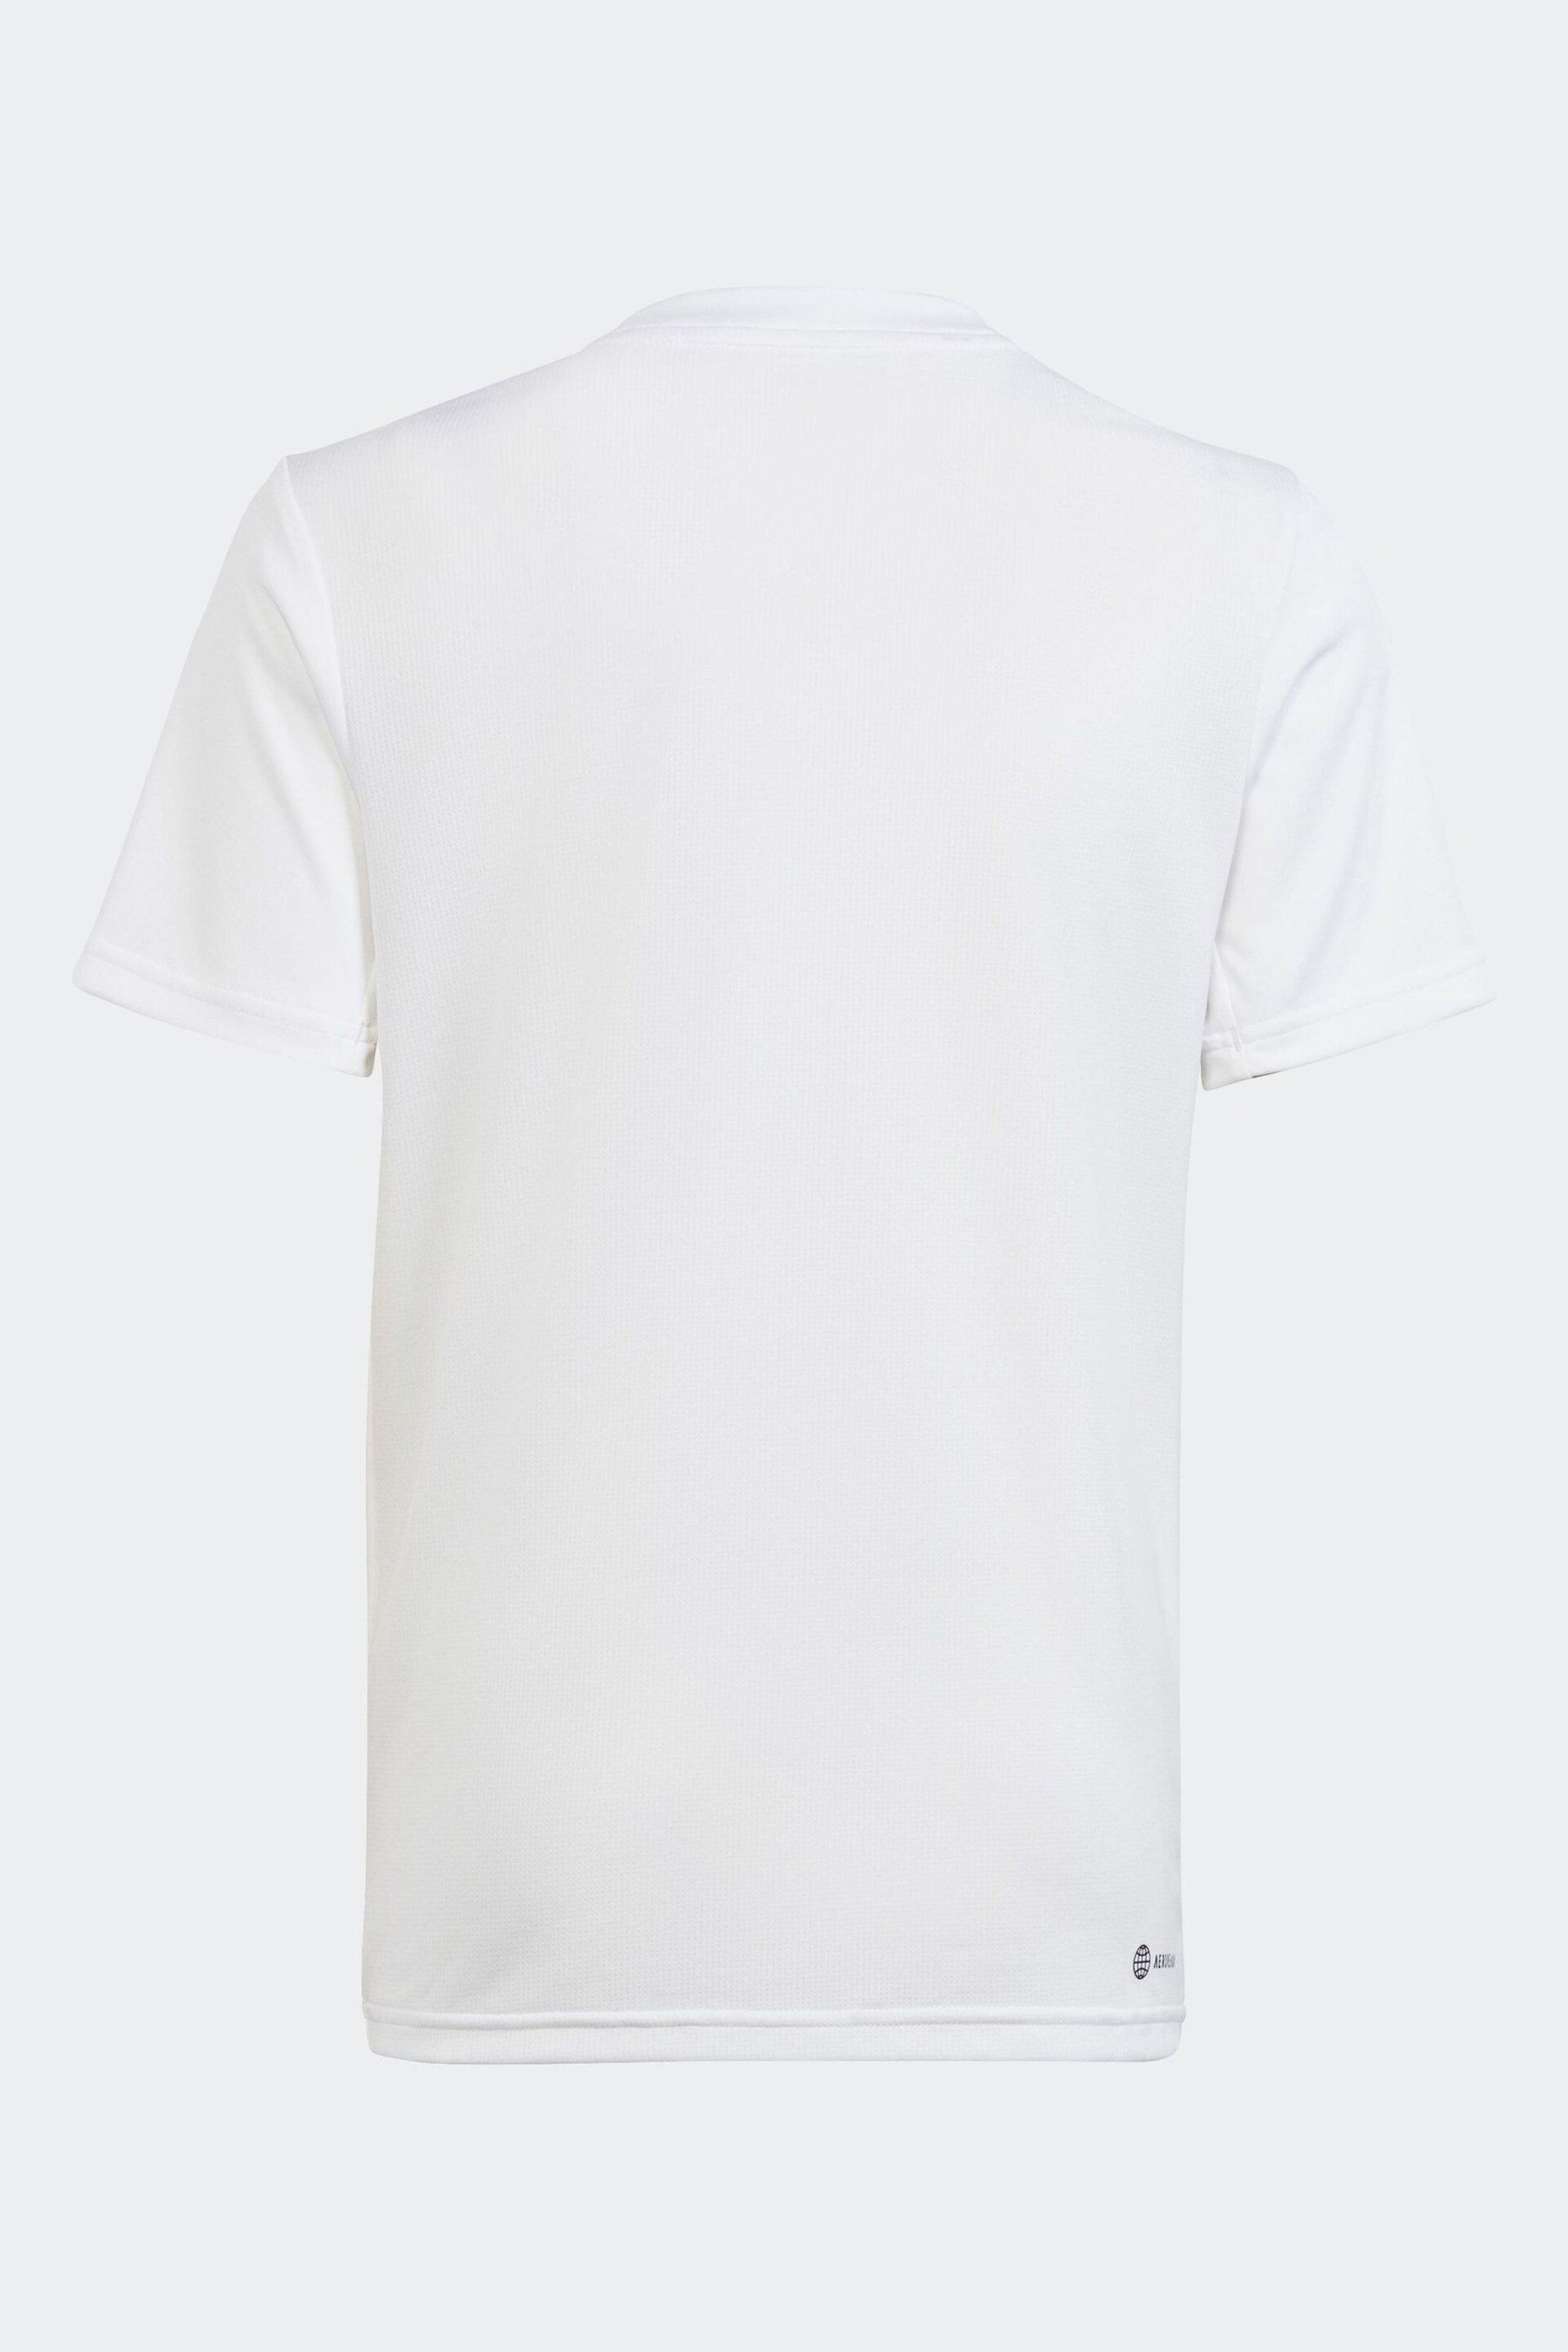 adidas White Regular Fit Sportswear Train Essentials Aeroready Logo T-Shirt - Image 2 of 5